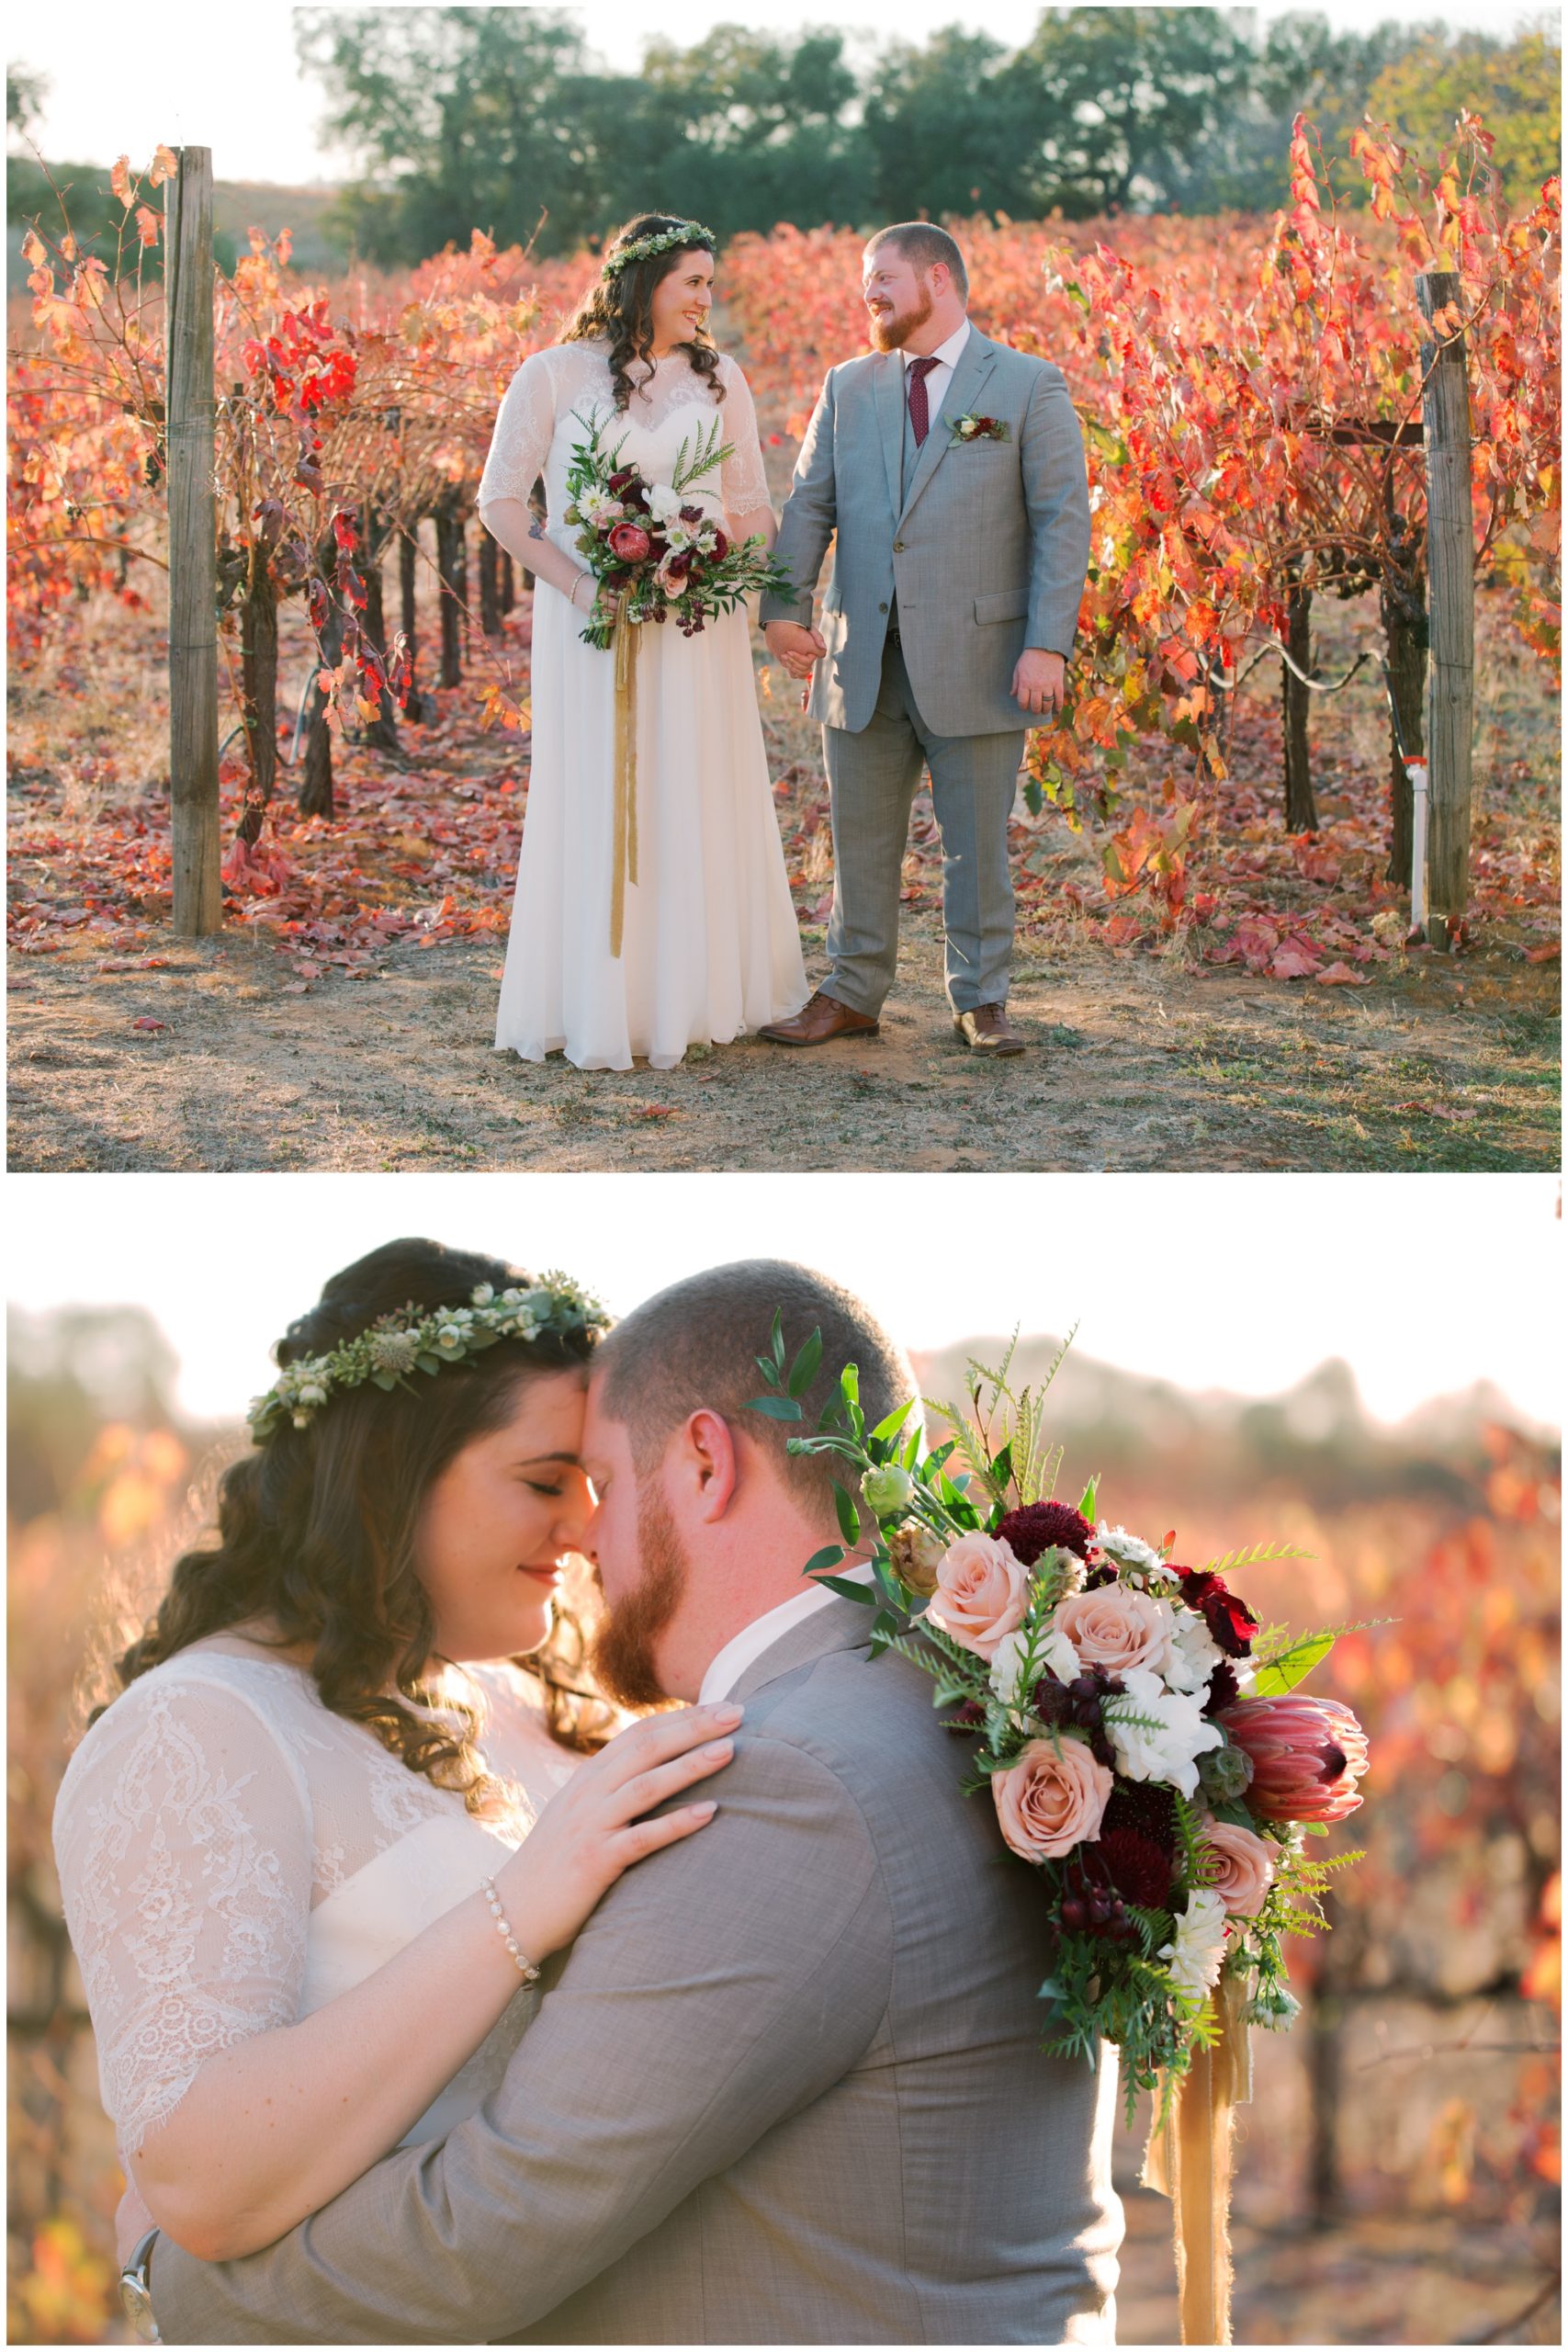 Autumn Winery wedding inspiration, Jennifer Clapp Photography